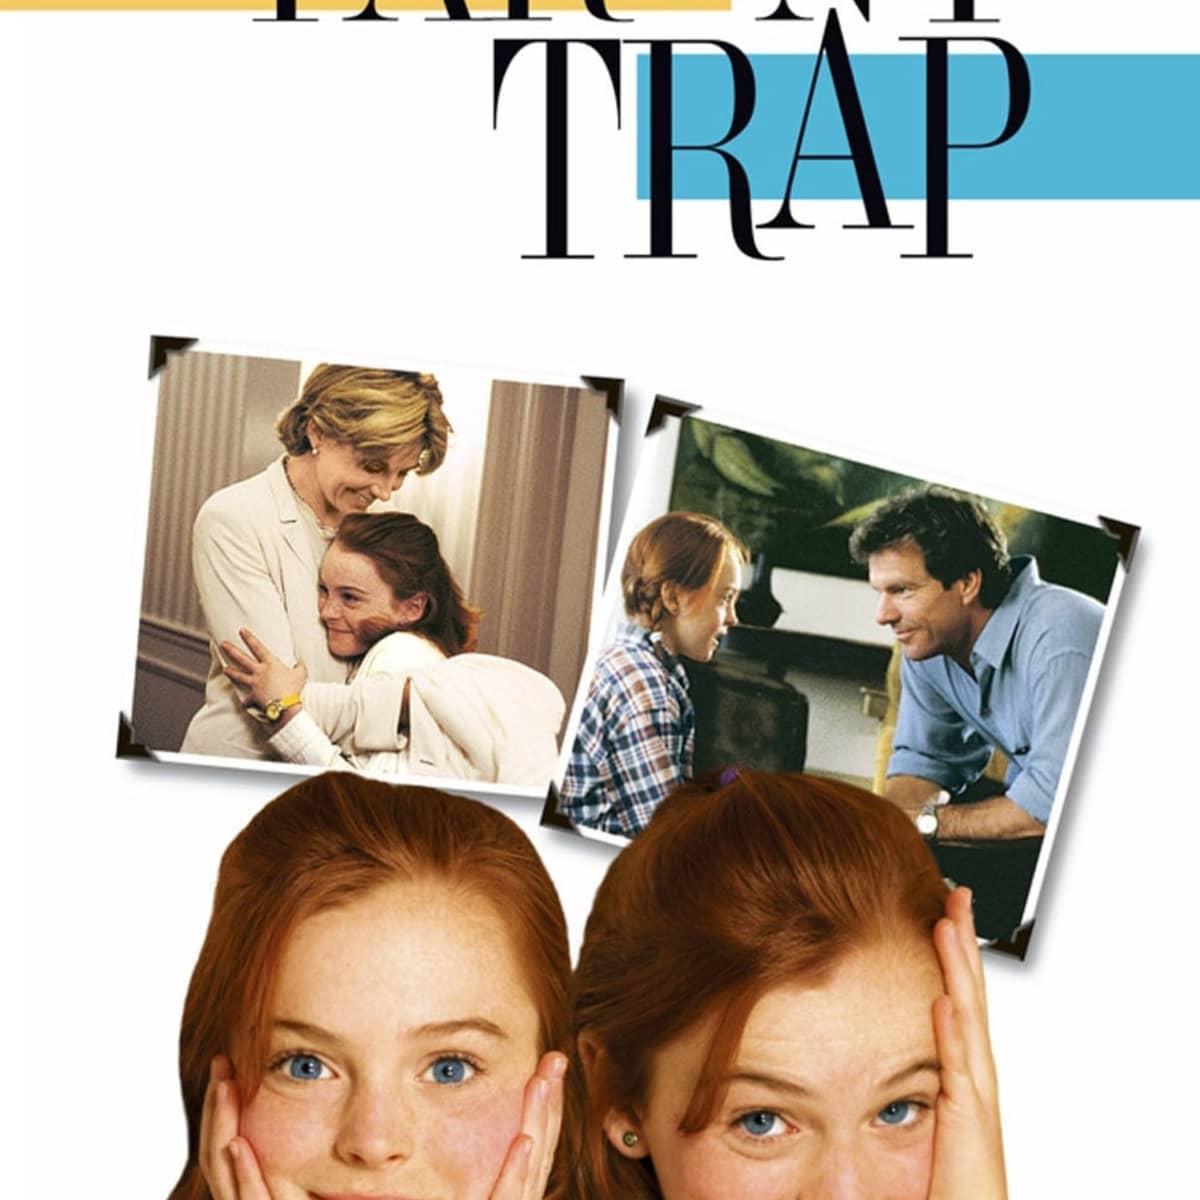 Watch The Parent Trap